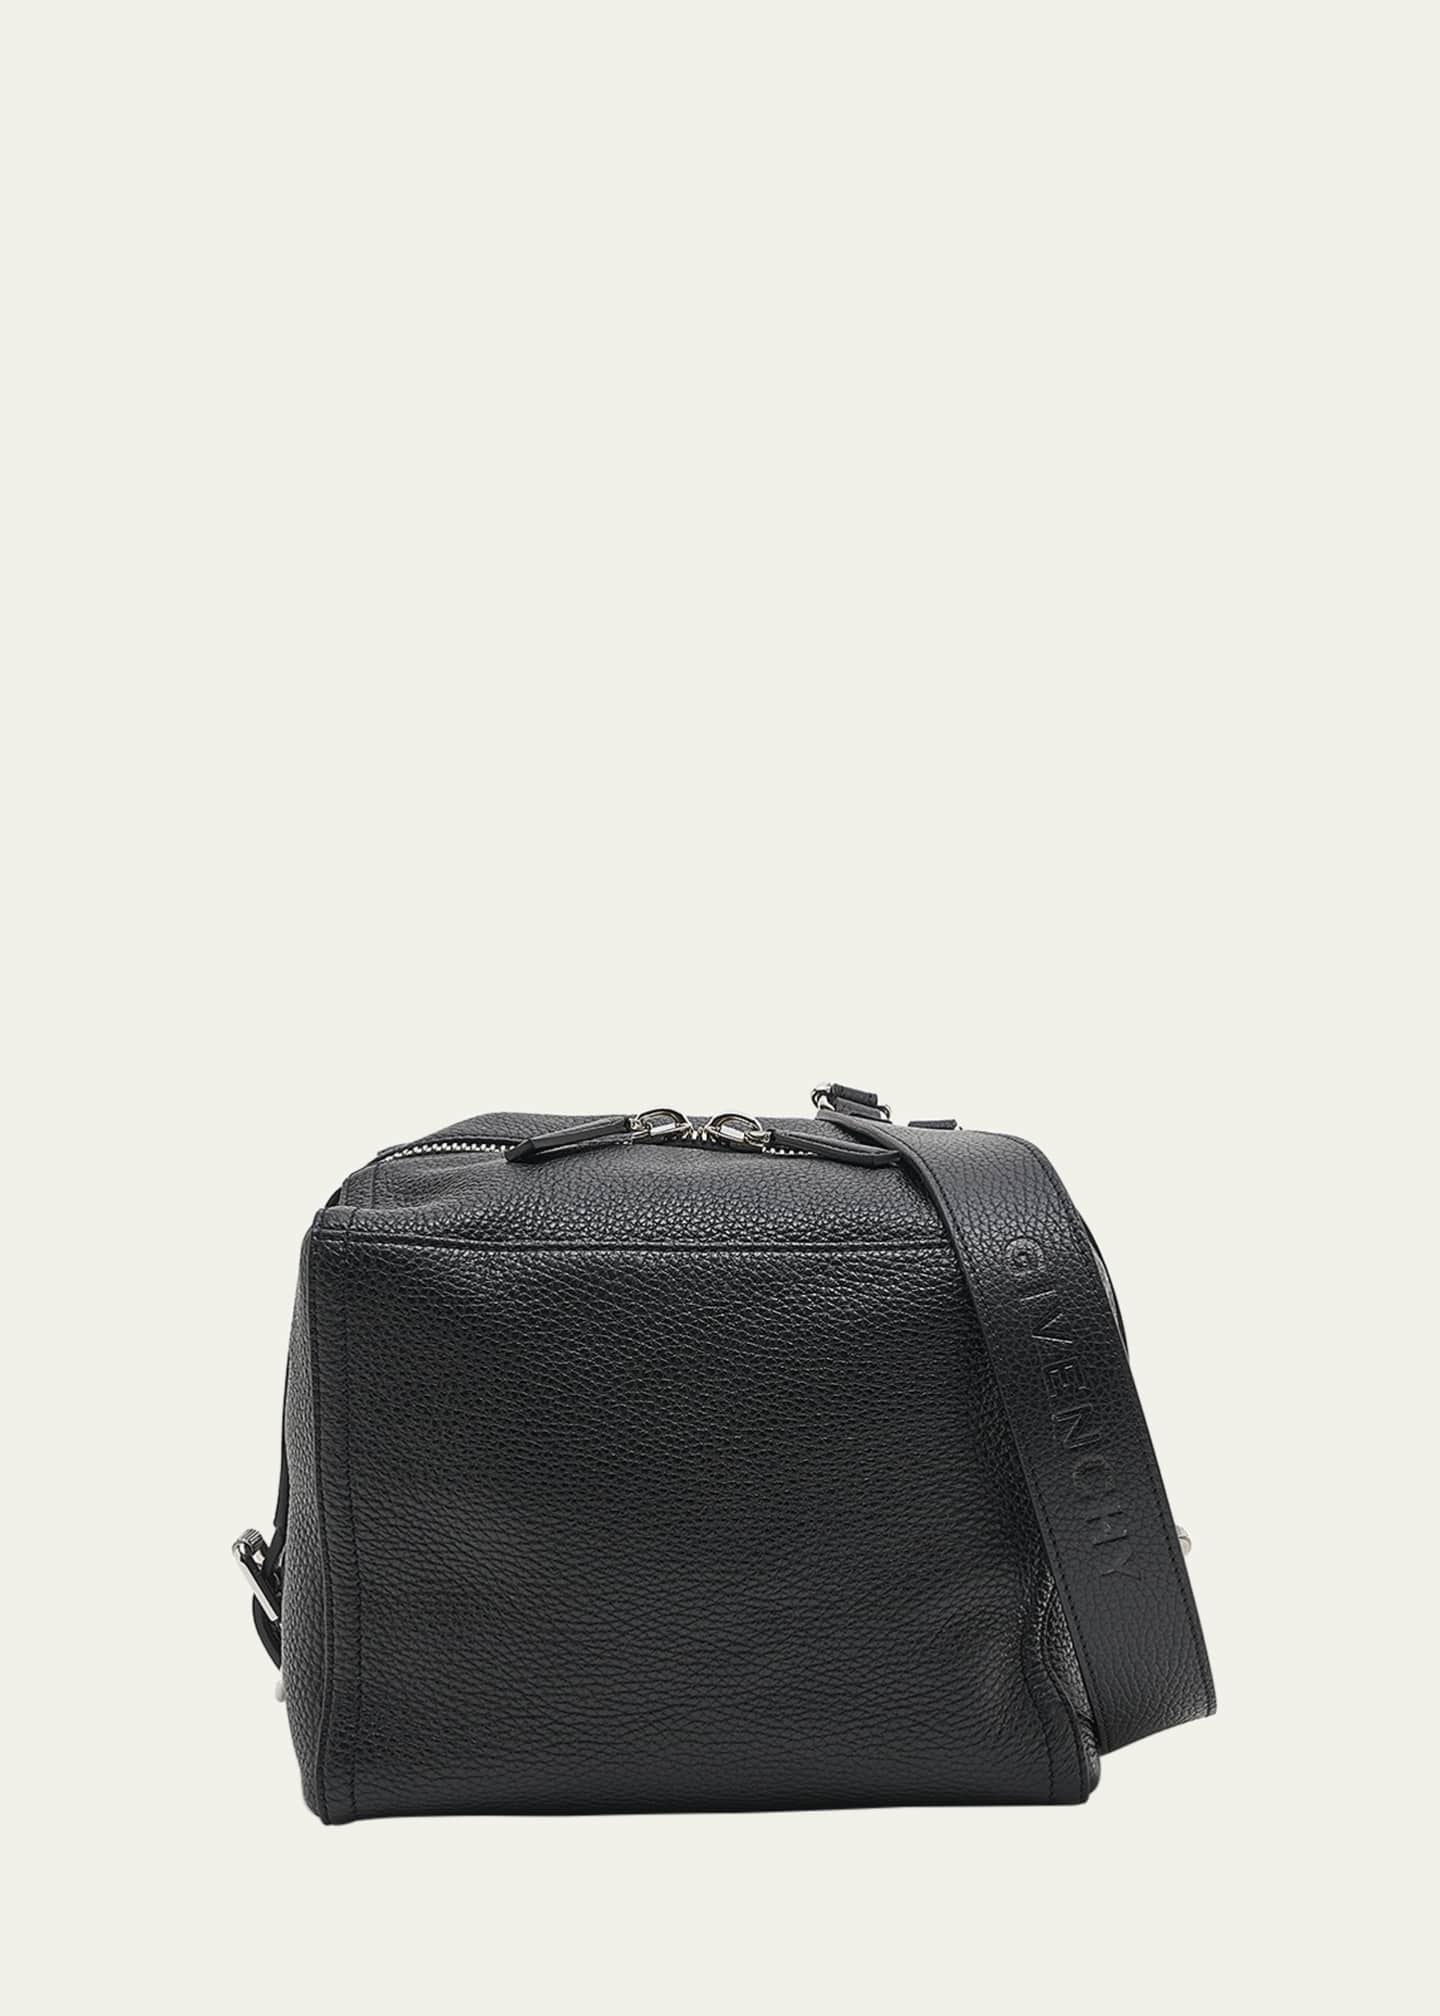 Givenchy Pandora Small Leather Crossbody Bag